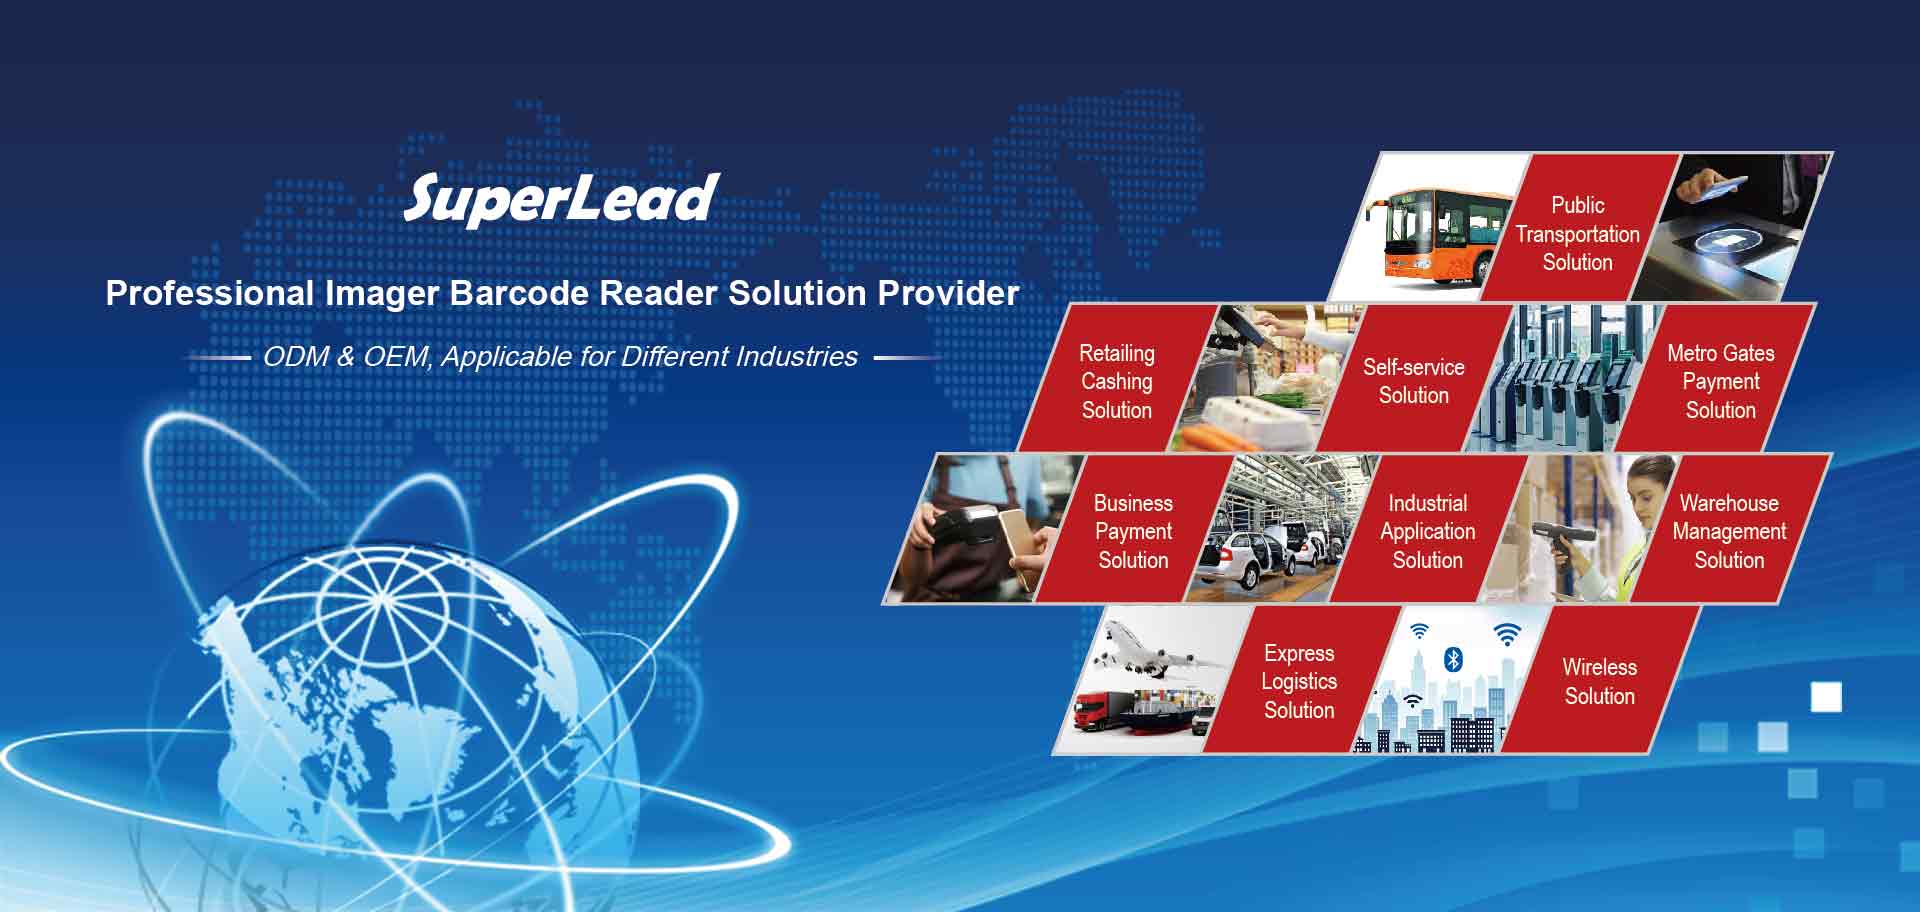 Superlead-Professional Imager Barcode Reader Solution Provider